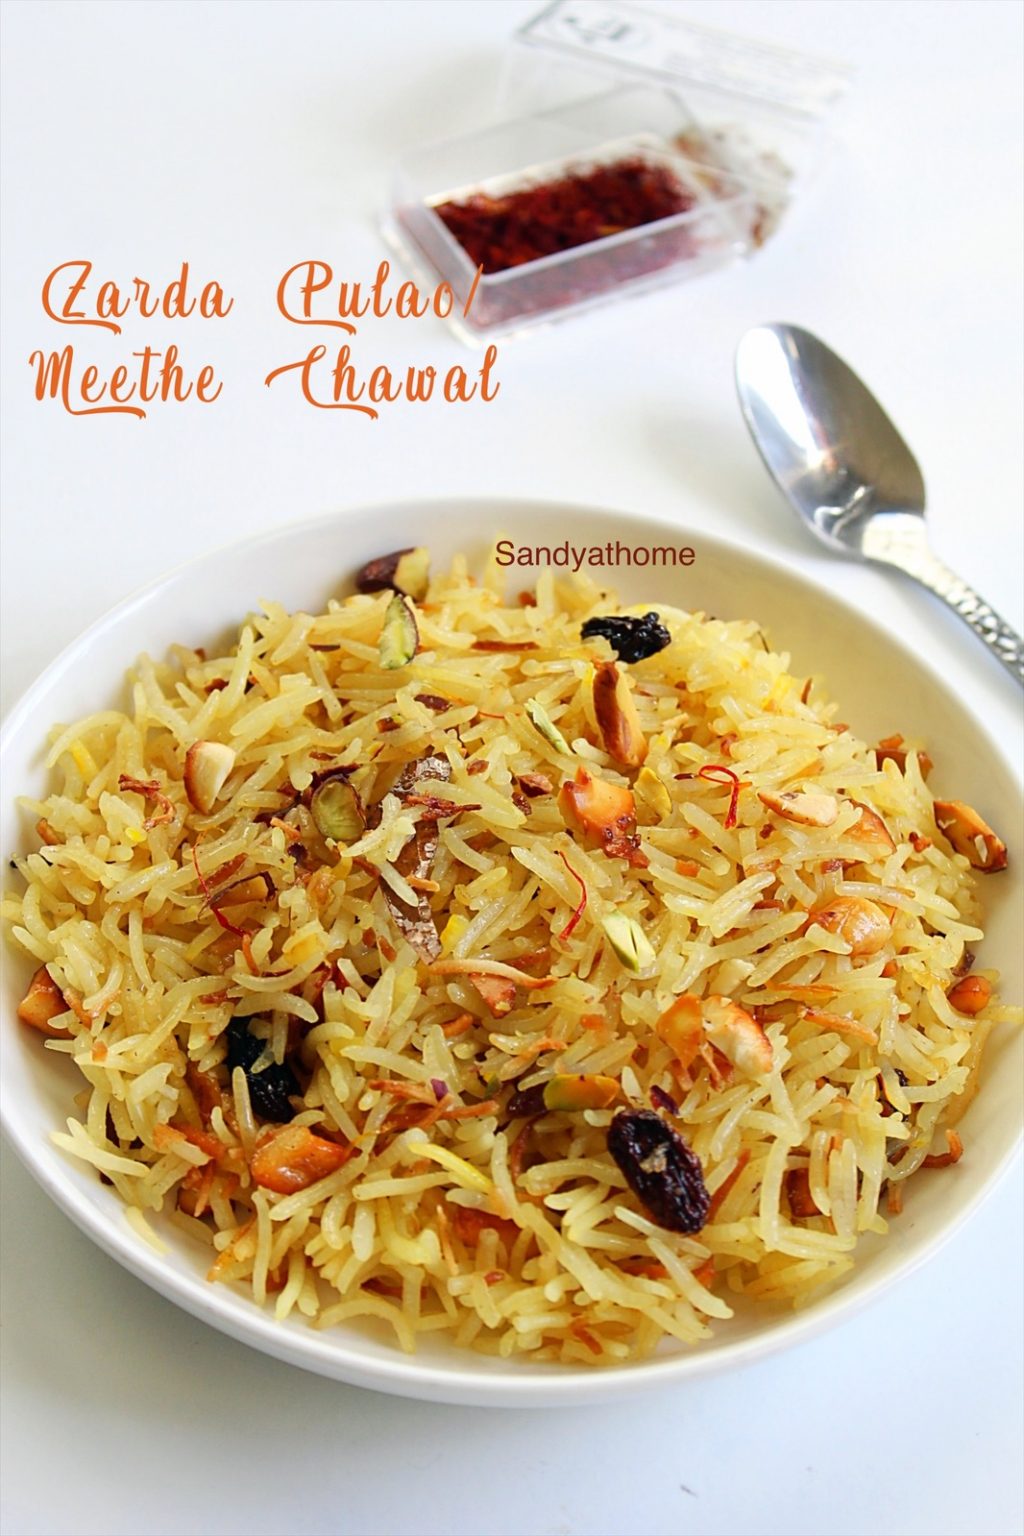 Zarda pulao recipe, Meethe chawal, Sweet rice - Sandhya's recipes